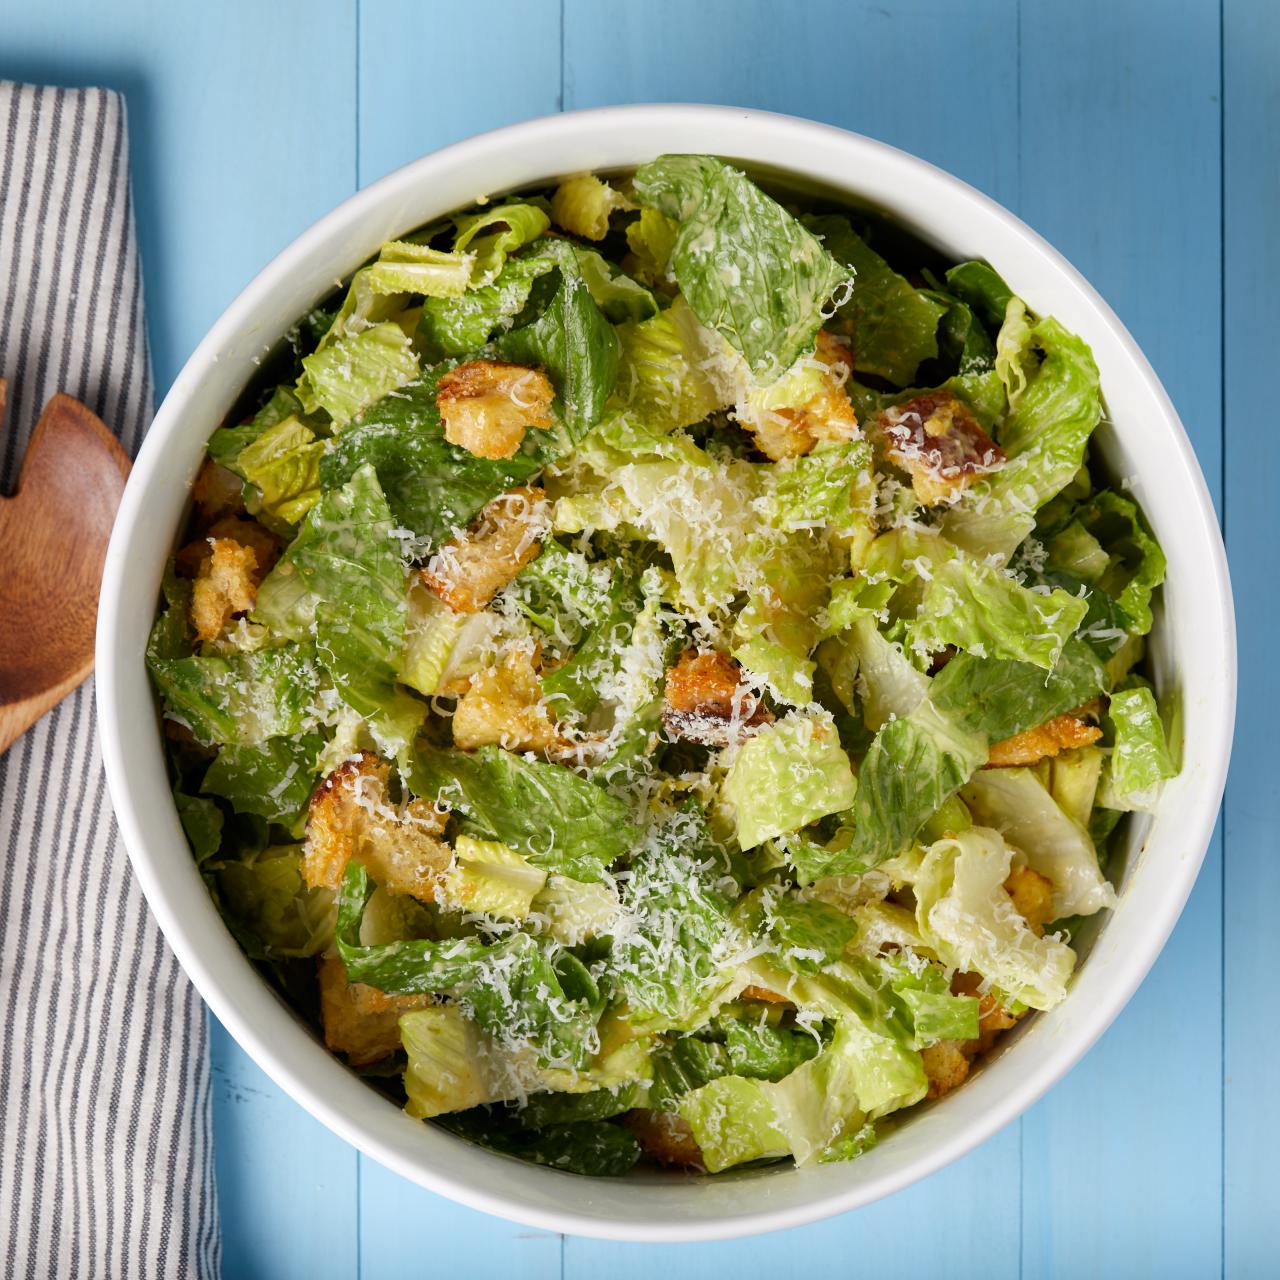 Green Salad Recipe for Beginners  Green salad recipes, Delicious